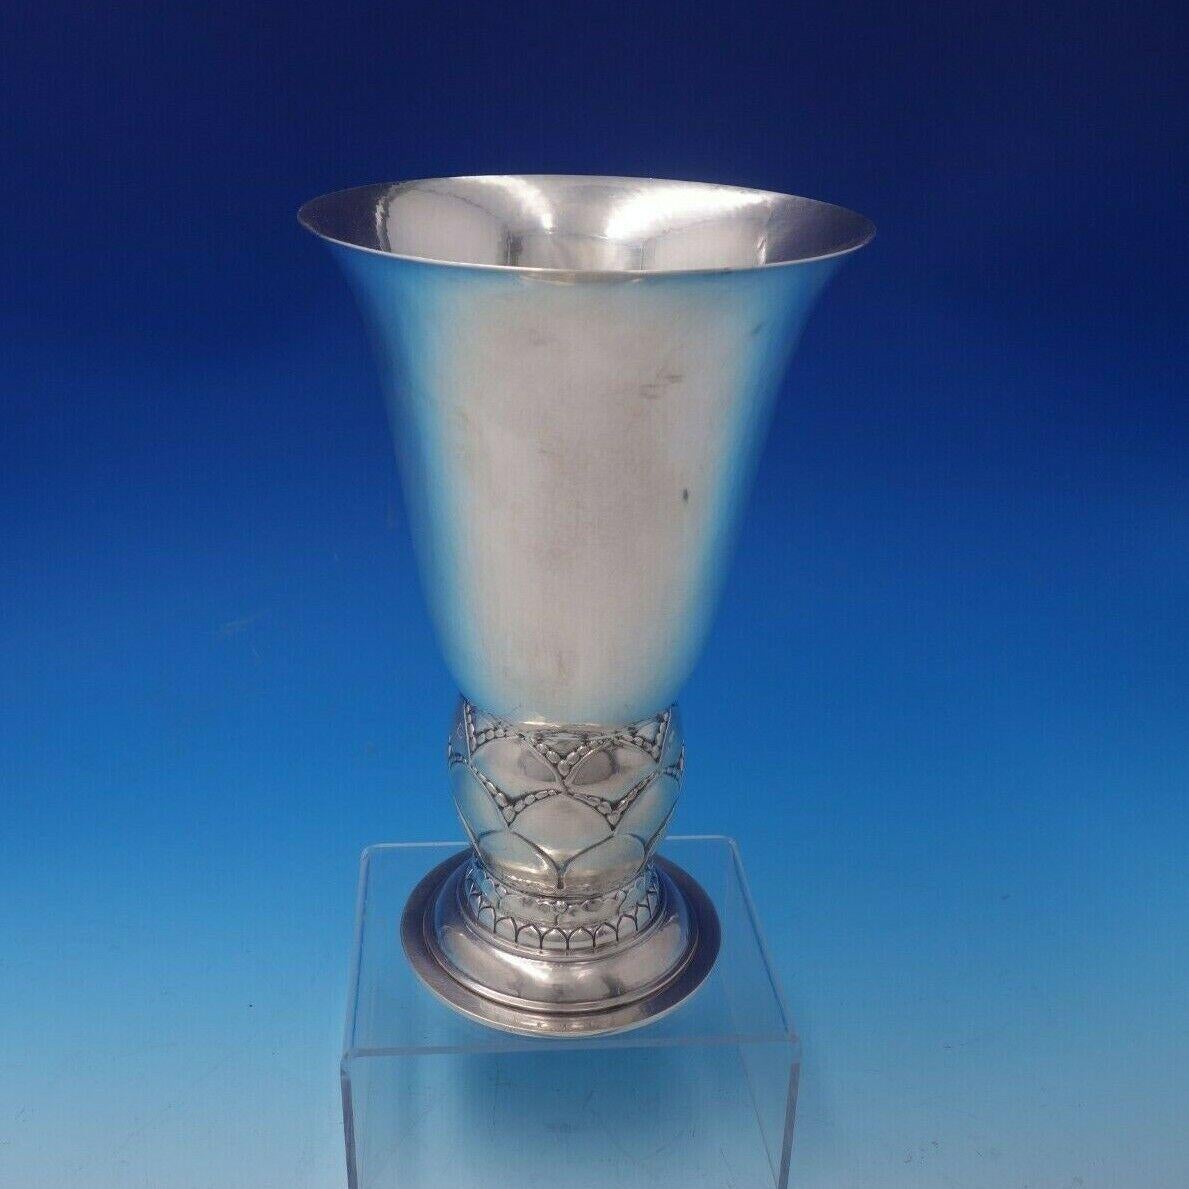 Georg Jensen

Exceptional Georg Jensen sterling silver vase marked #68. This piece measures 8 5/8